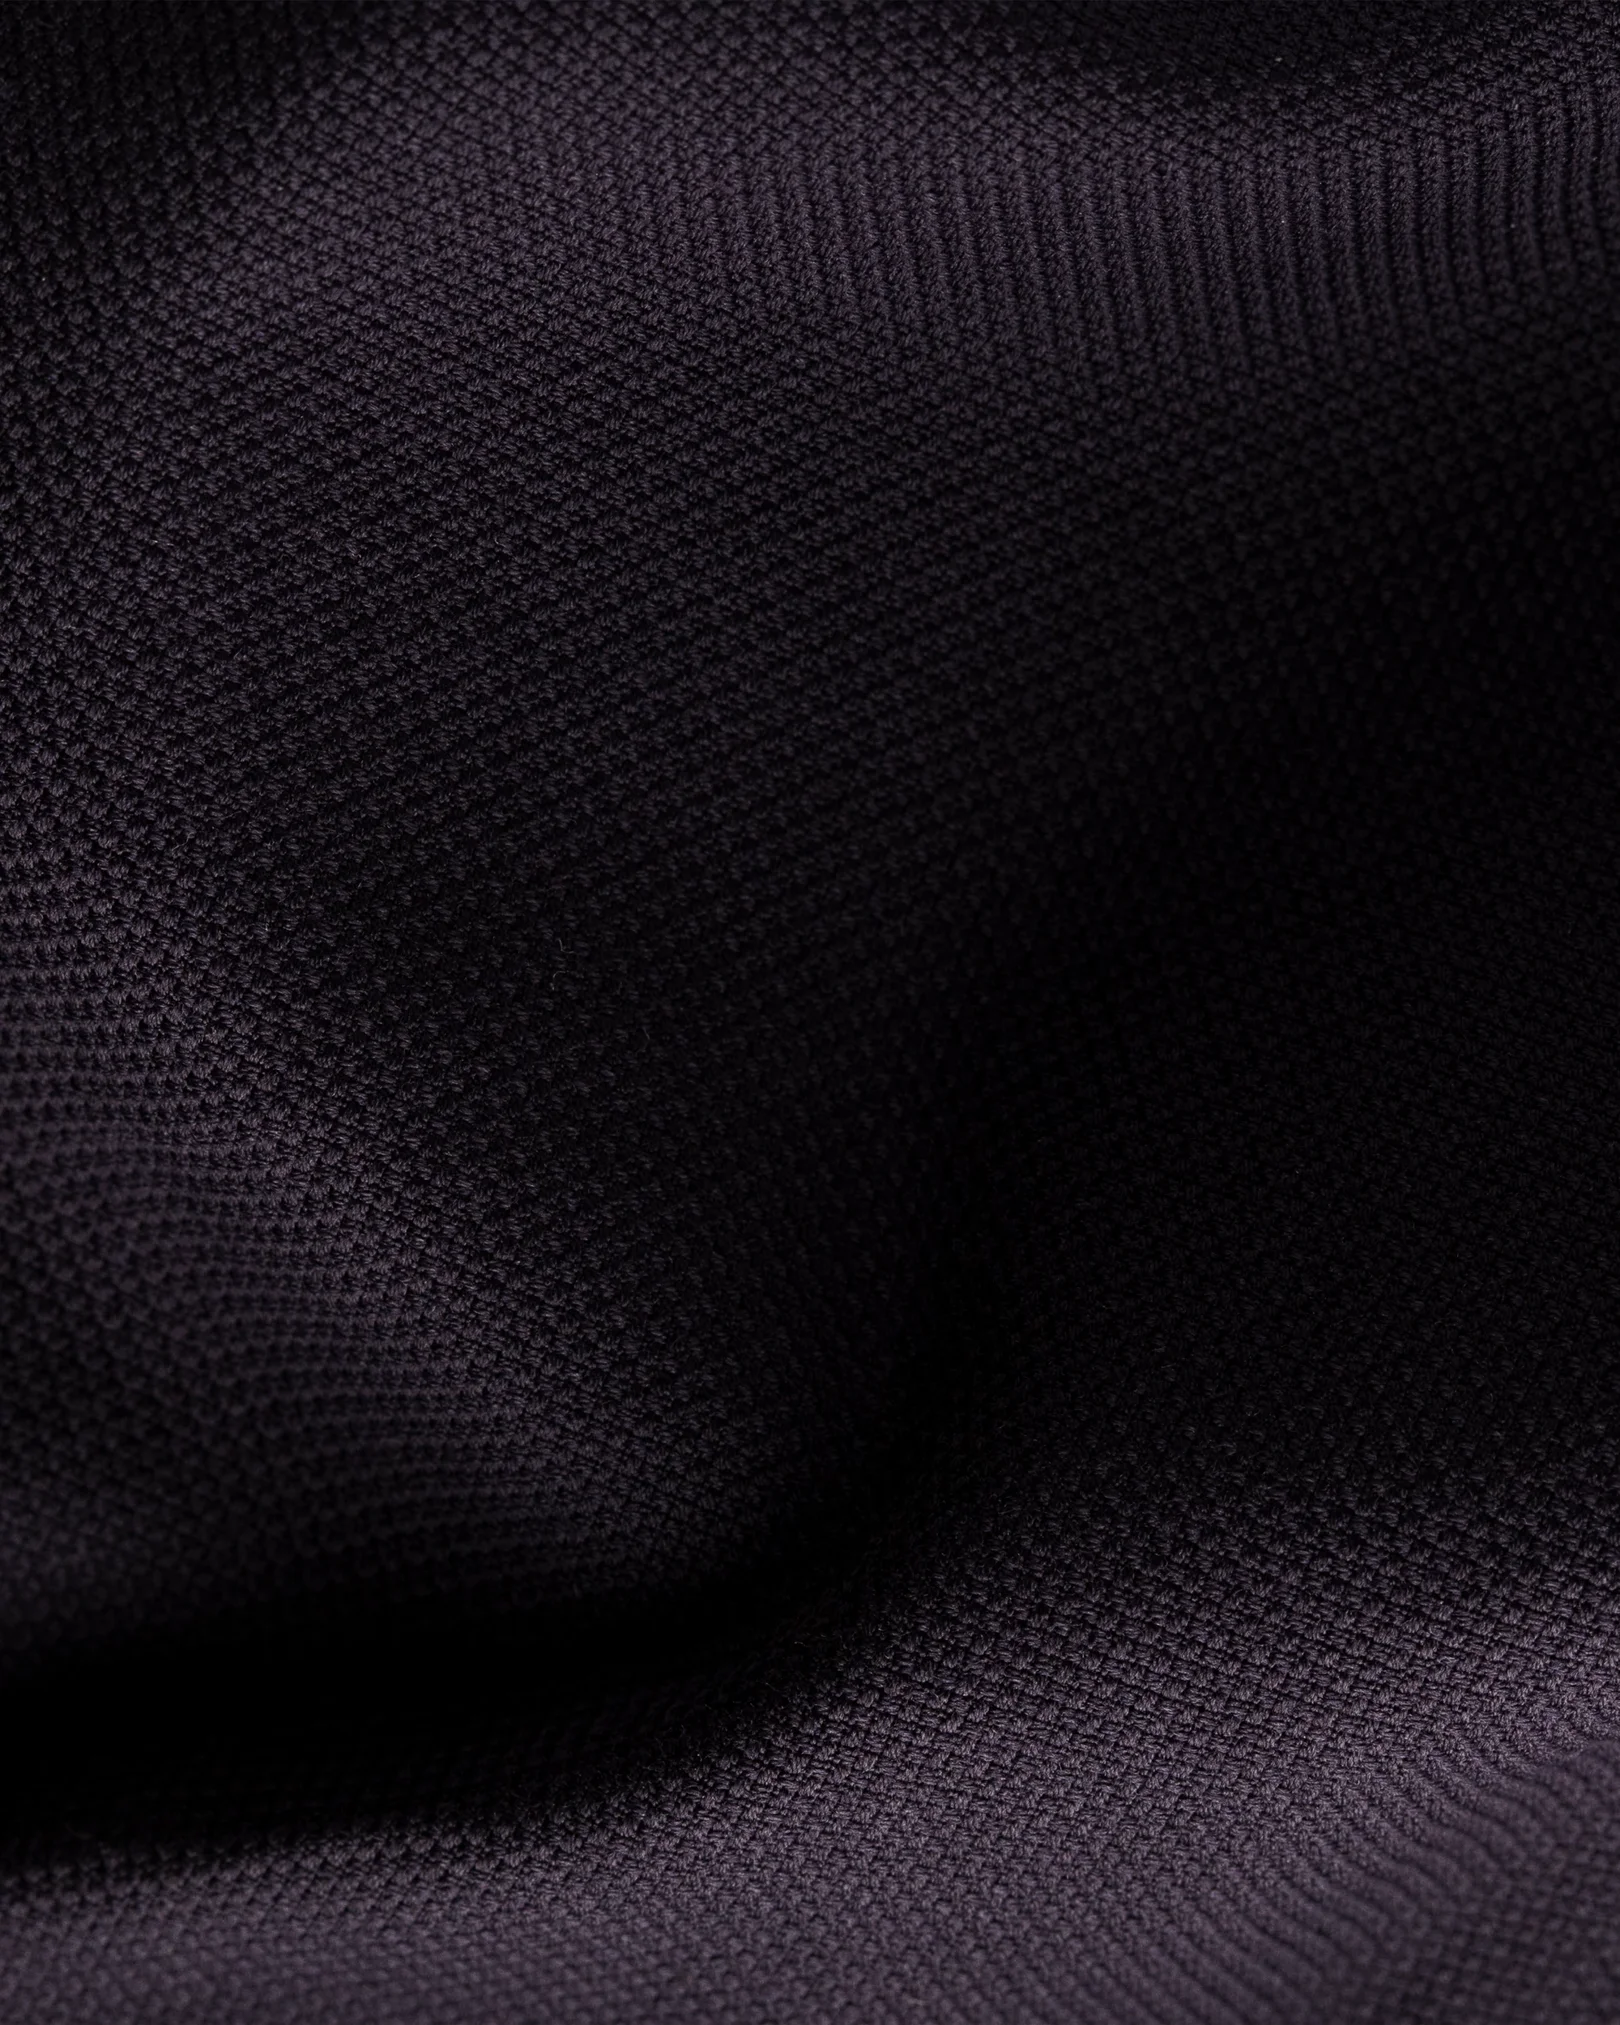 Eton - black oxford shirt soft